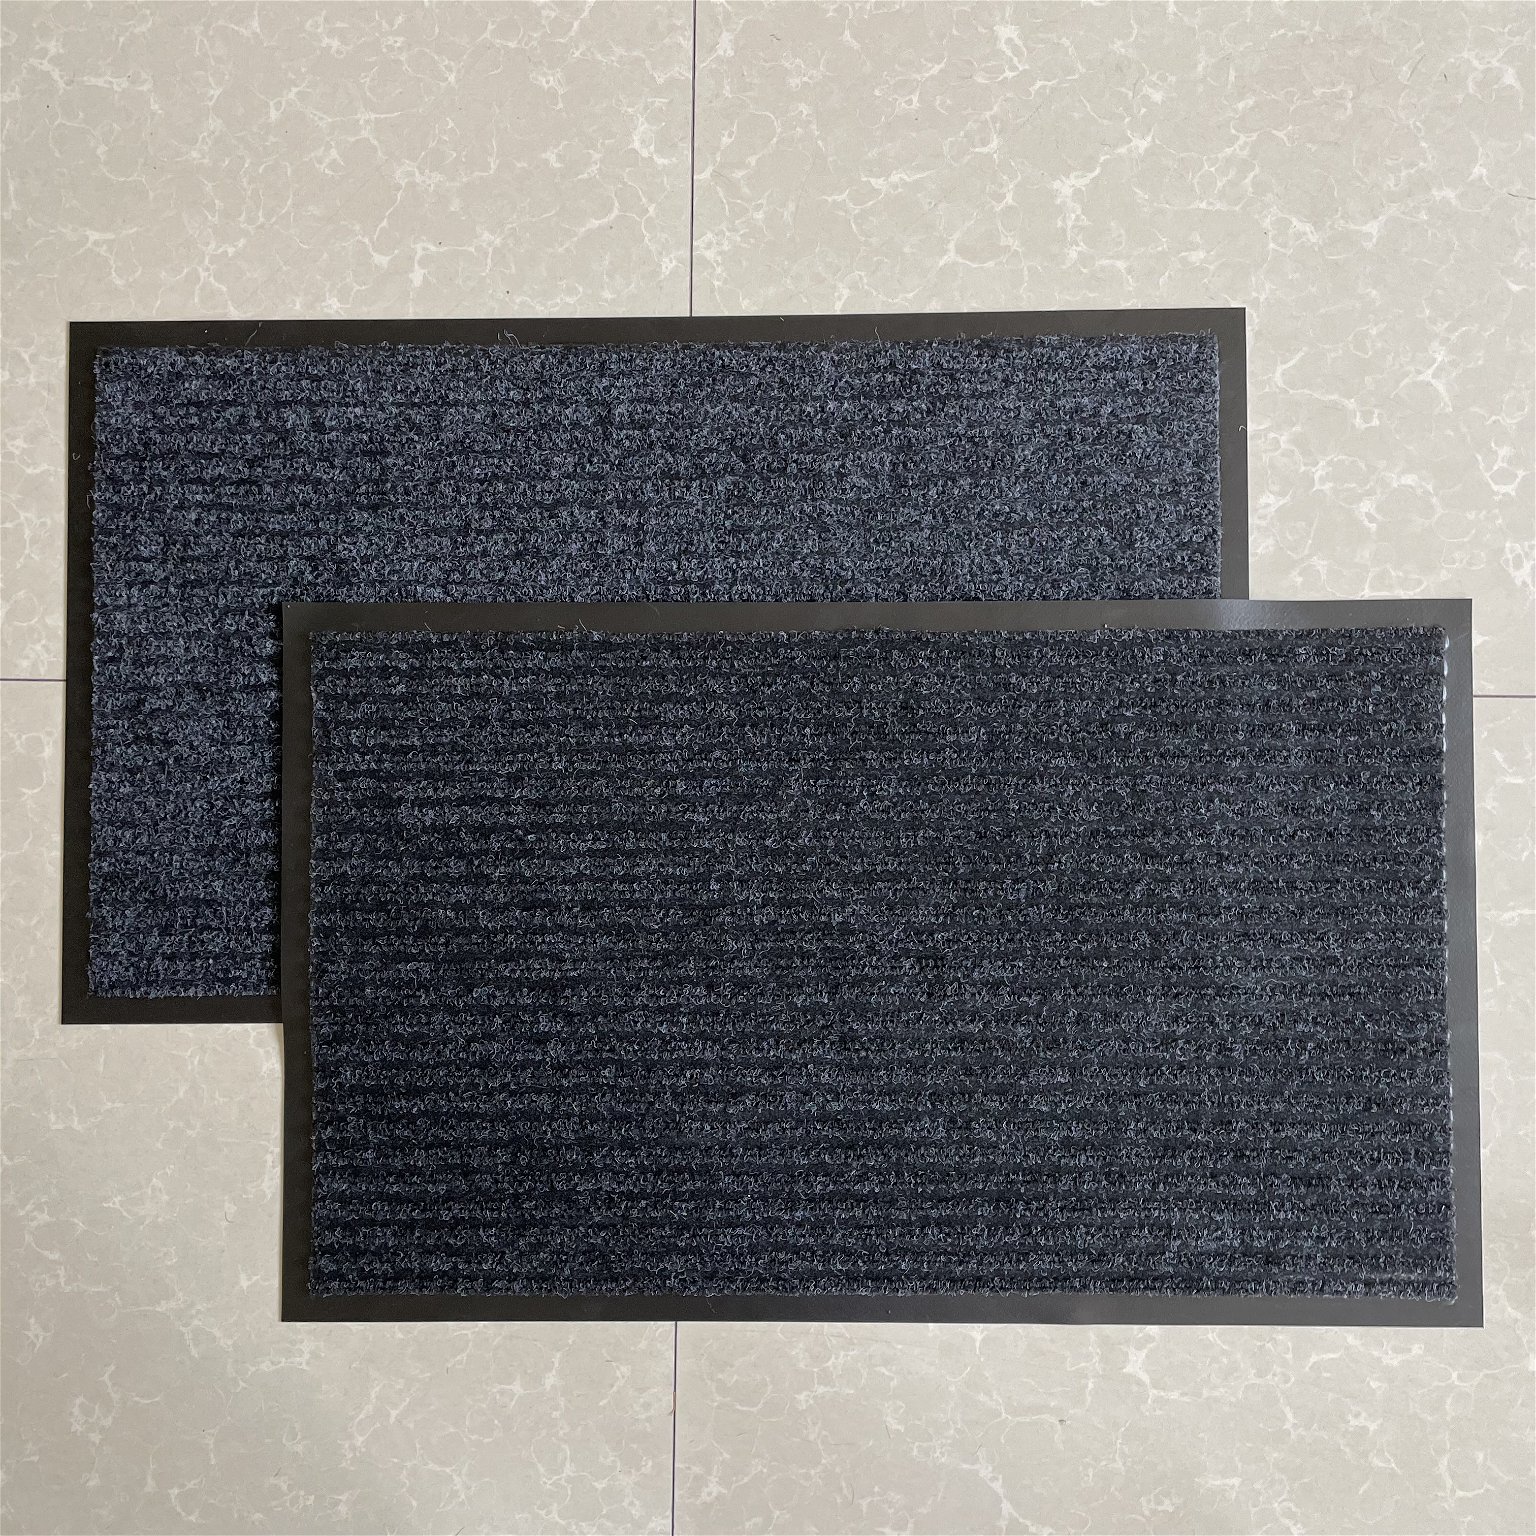 Durų kilimėlis Polyester mat, 45 x 75 cm, juodos sp.